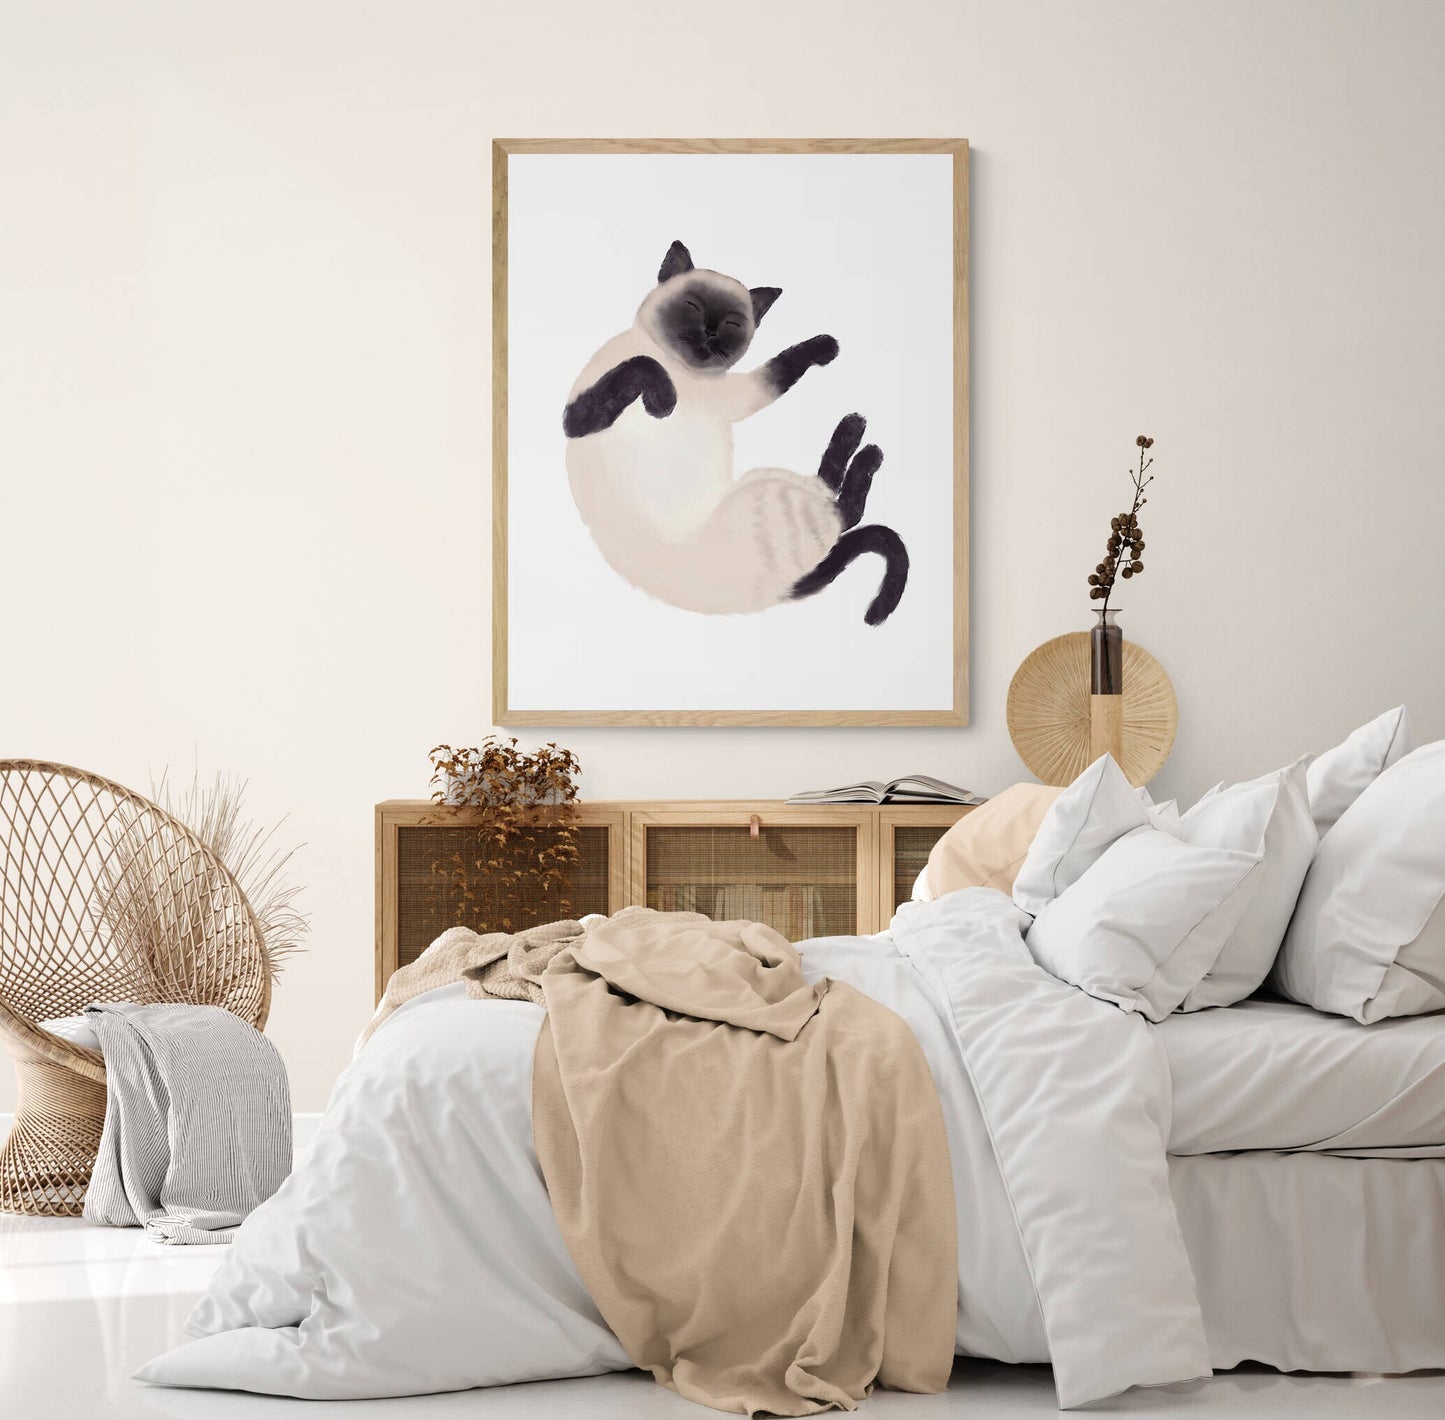 Sleeping Siamese Cat Print, Sleeping Cat Print, Sleeping Siamese Art, Cat Illustration, Home Decor, Sleeping Cat Painting, Animal Memorial